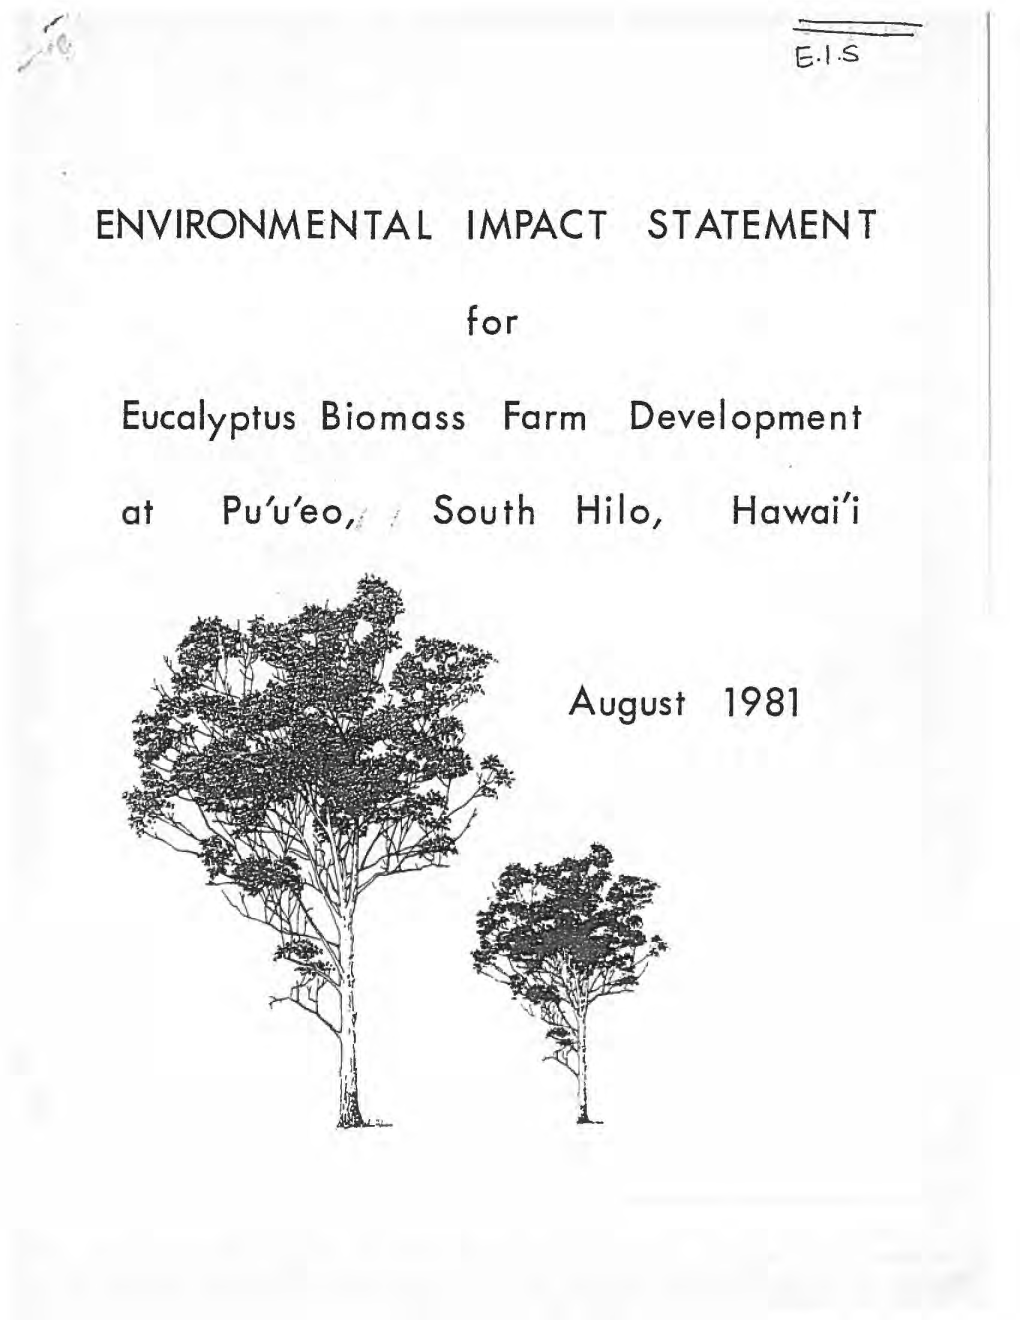 For Eucalyptus Biomass Farm Development at Pu'u'eo, South Hilo, Hawaii" C